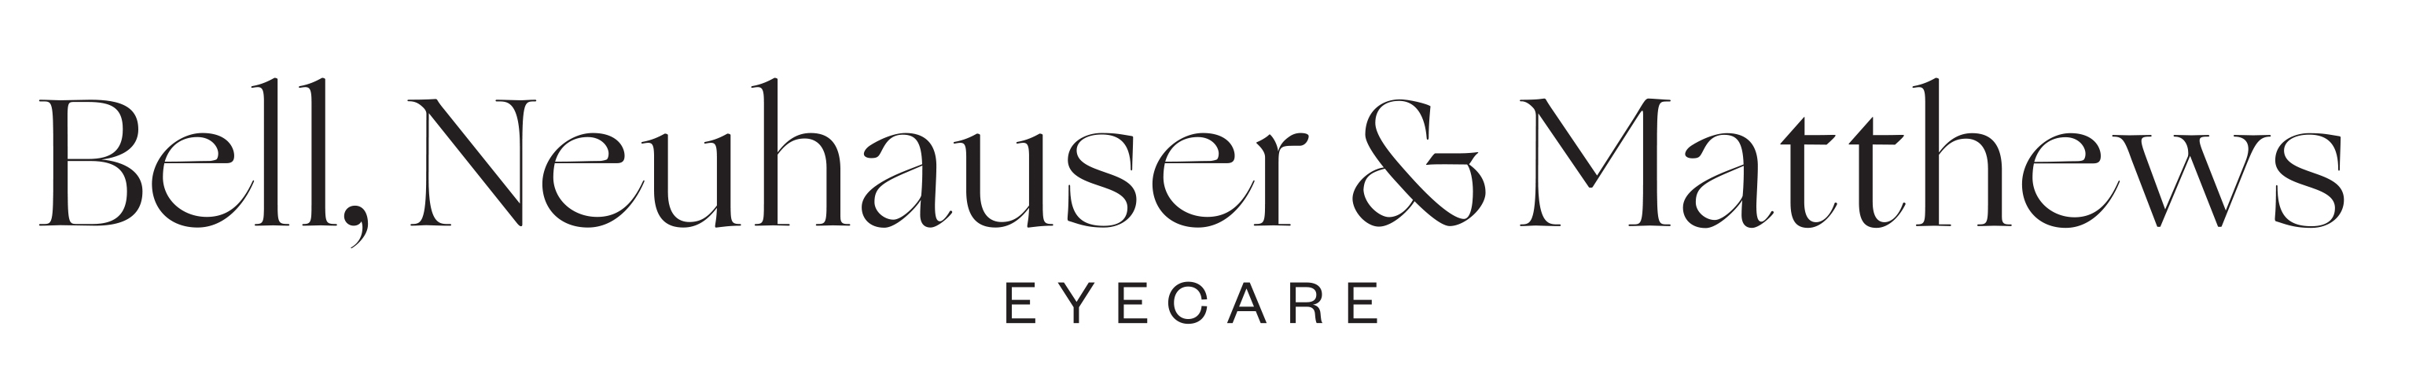 logo for Bell, Neuhauser & Matthews Optometrists Optometrists